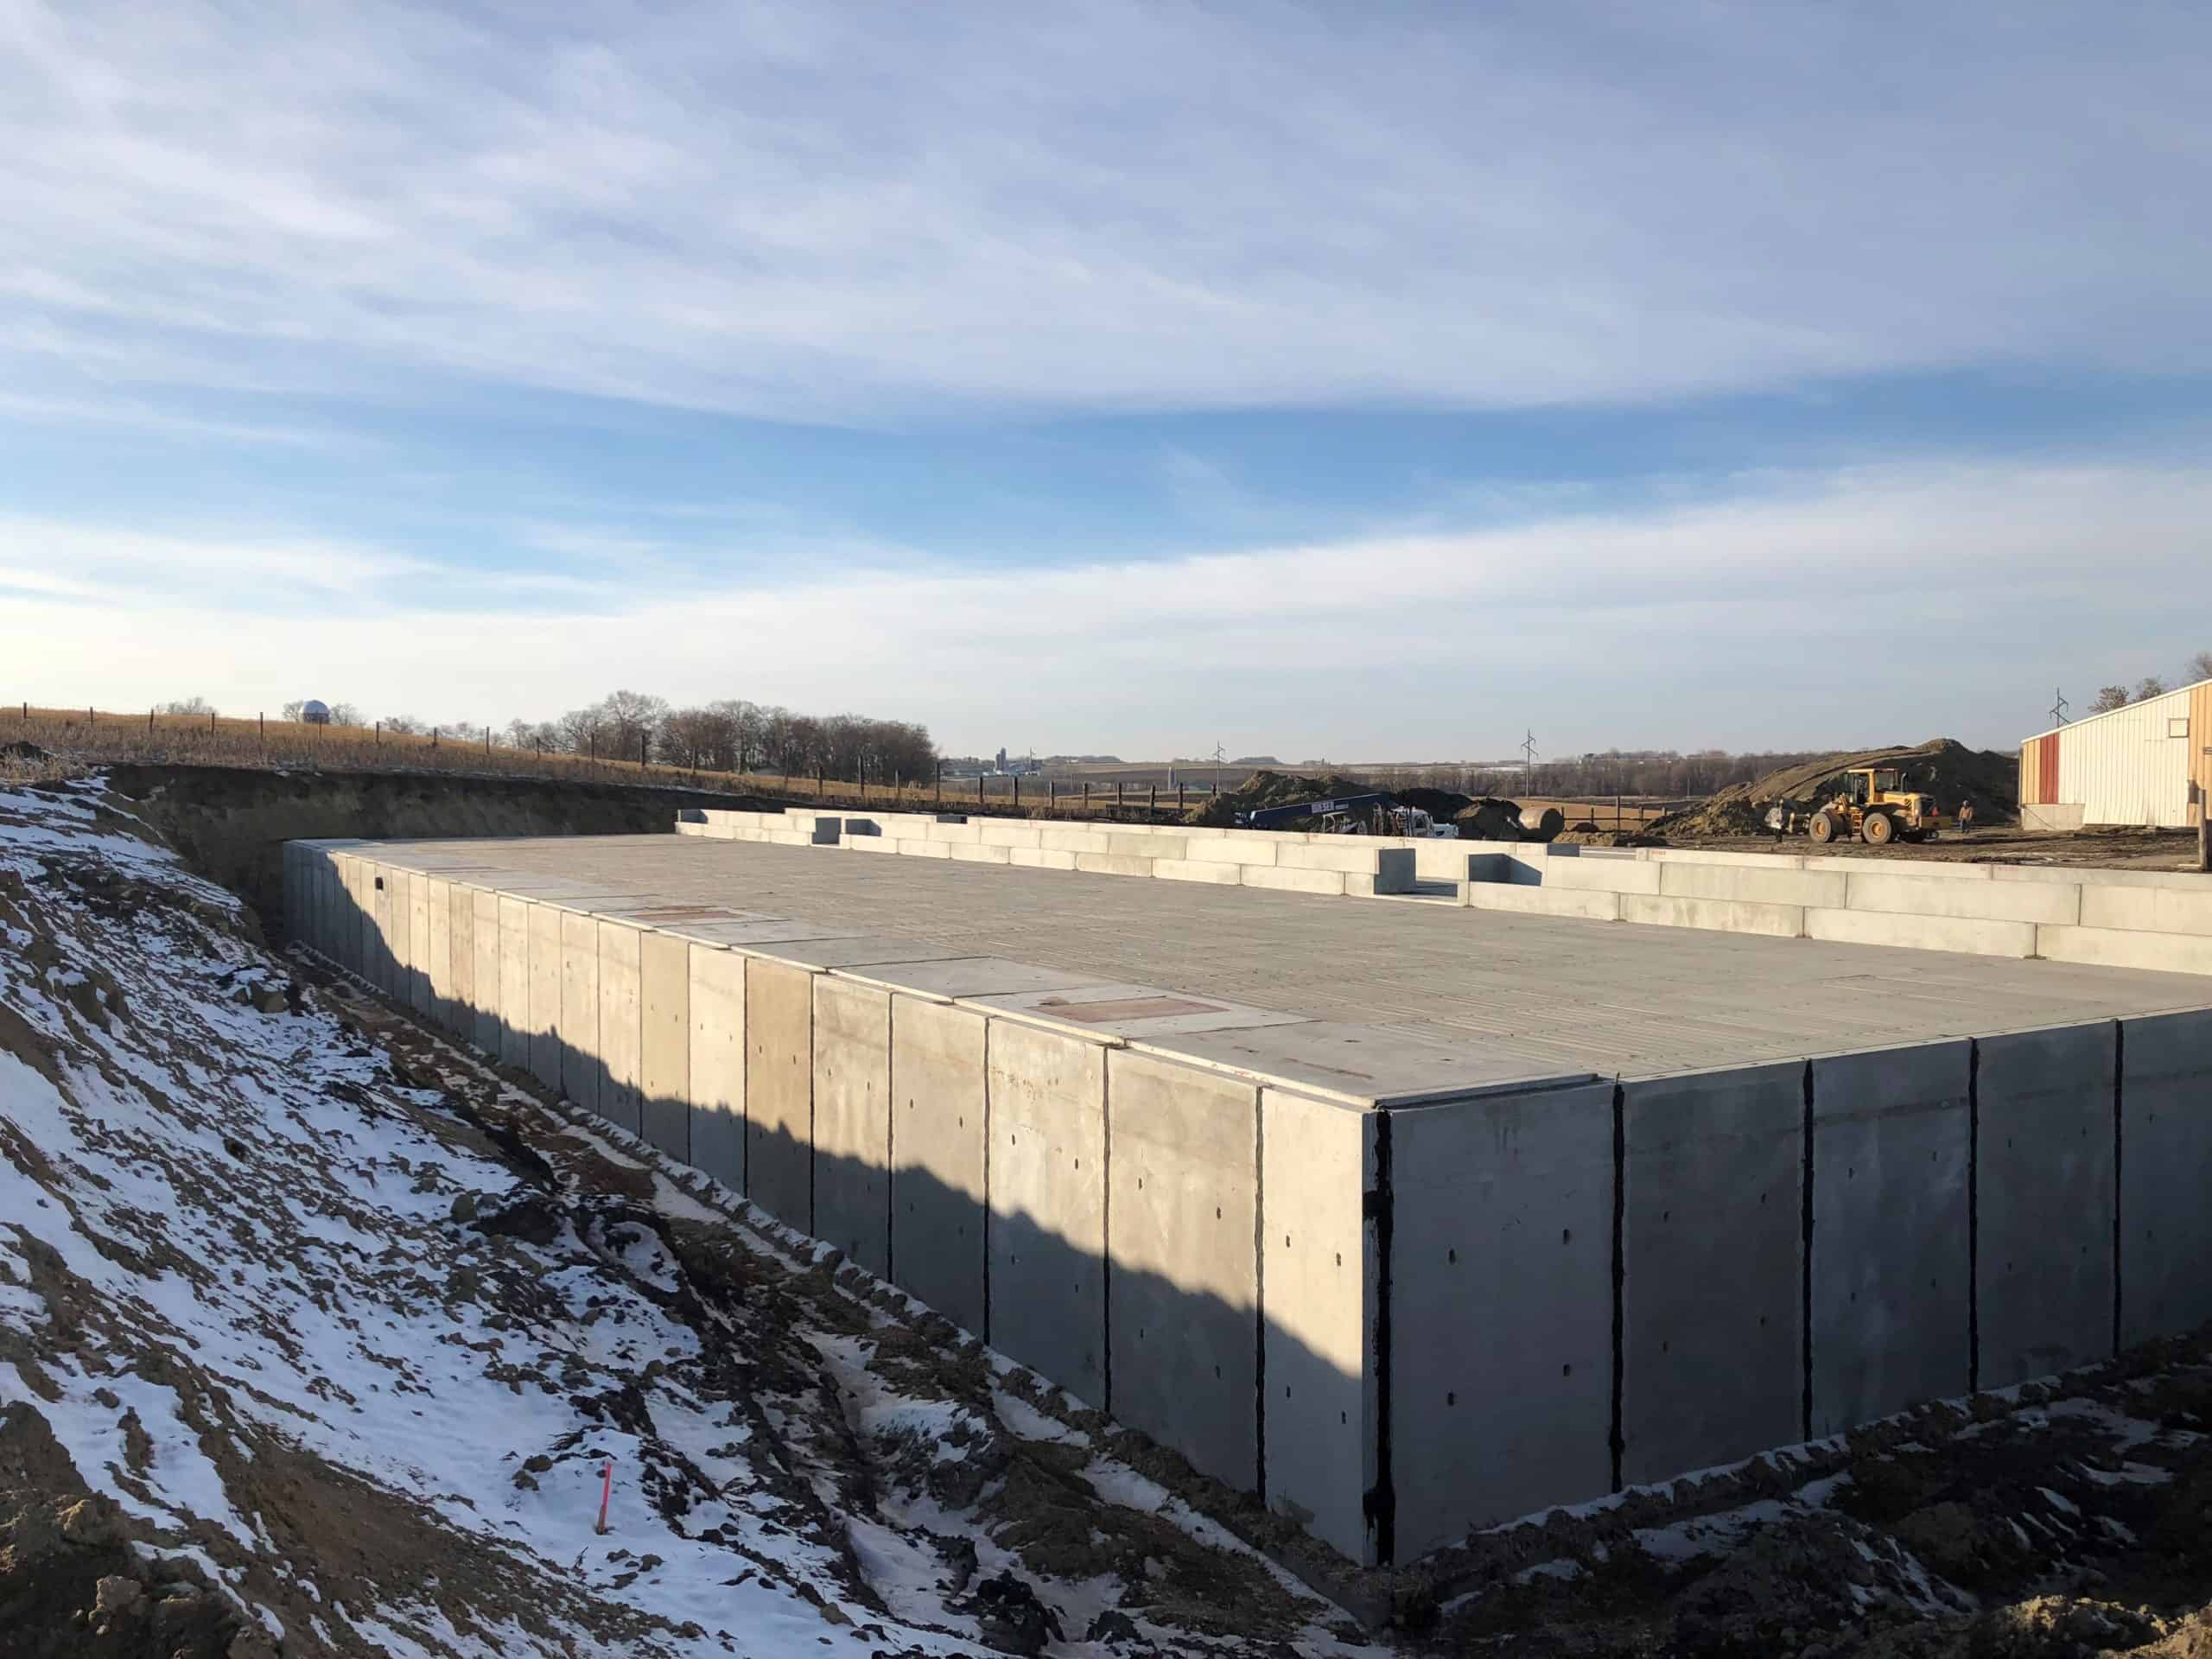 Magedanz Farms Manure Storage System by Wieser Concrete